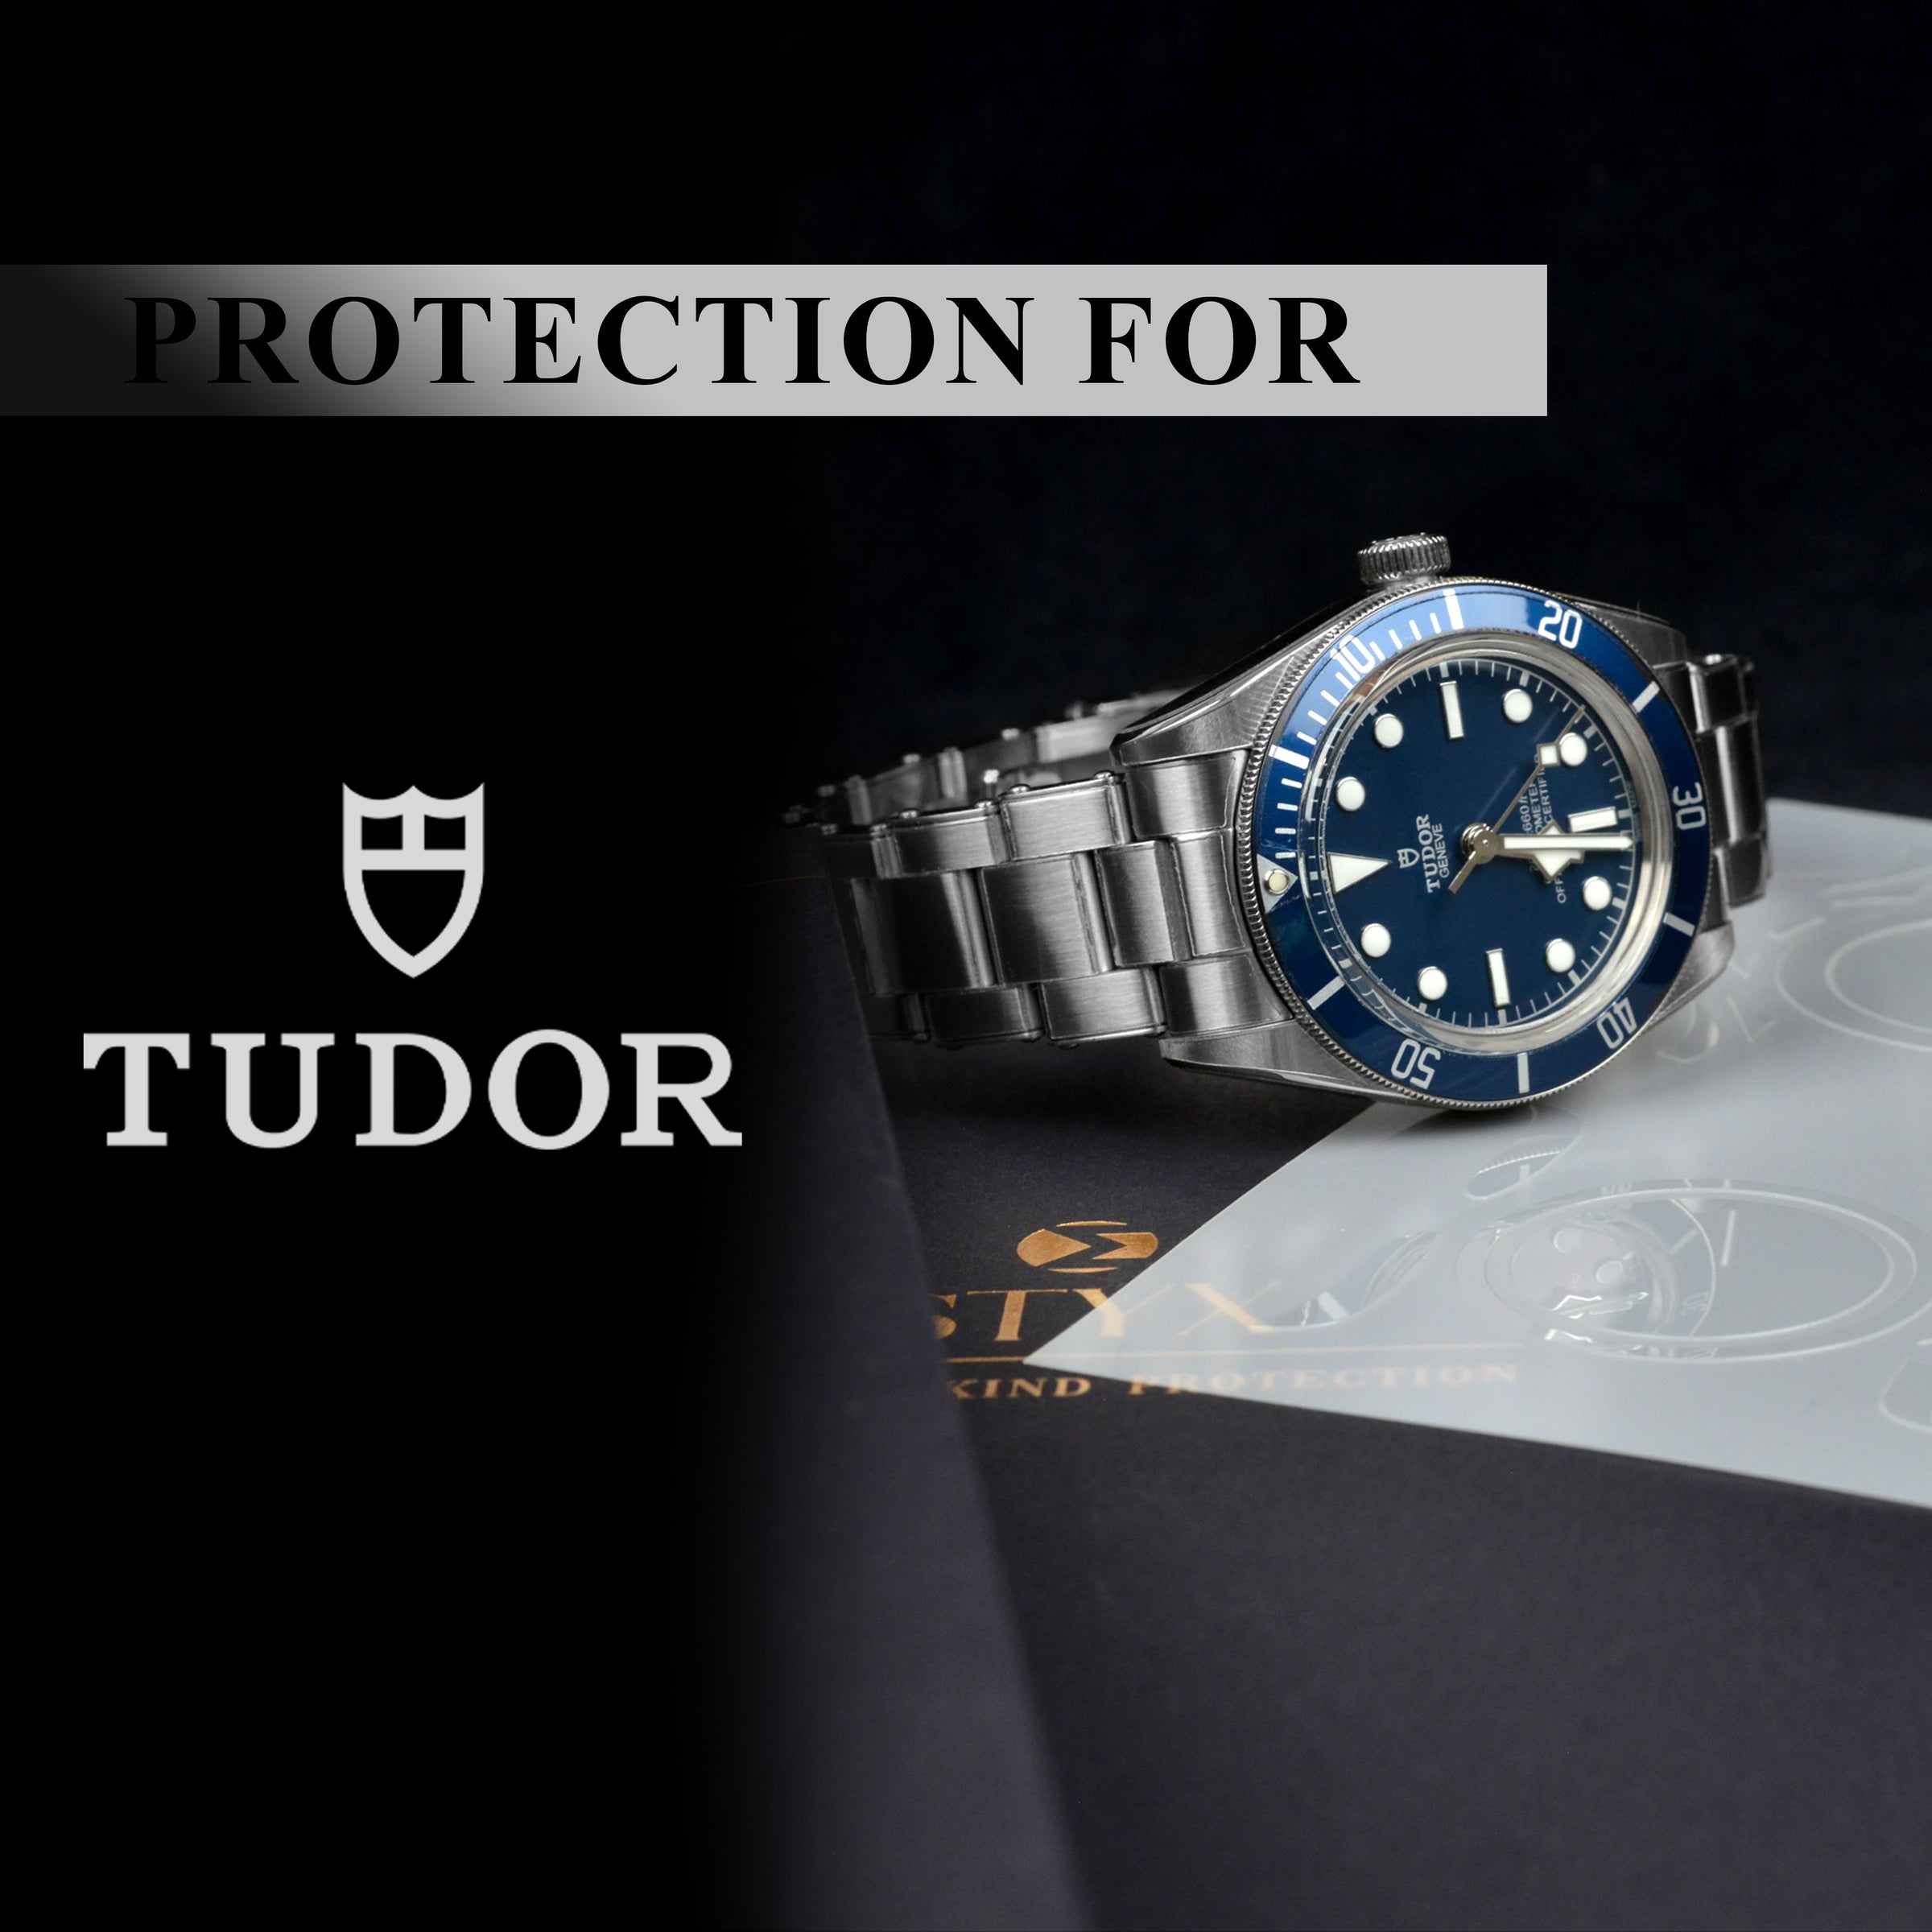 Tudor STYX Protection